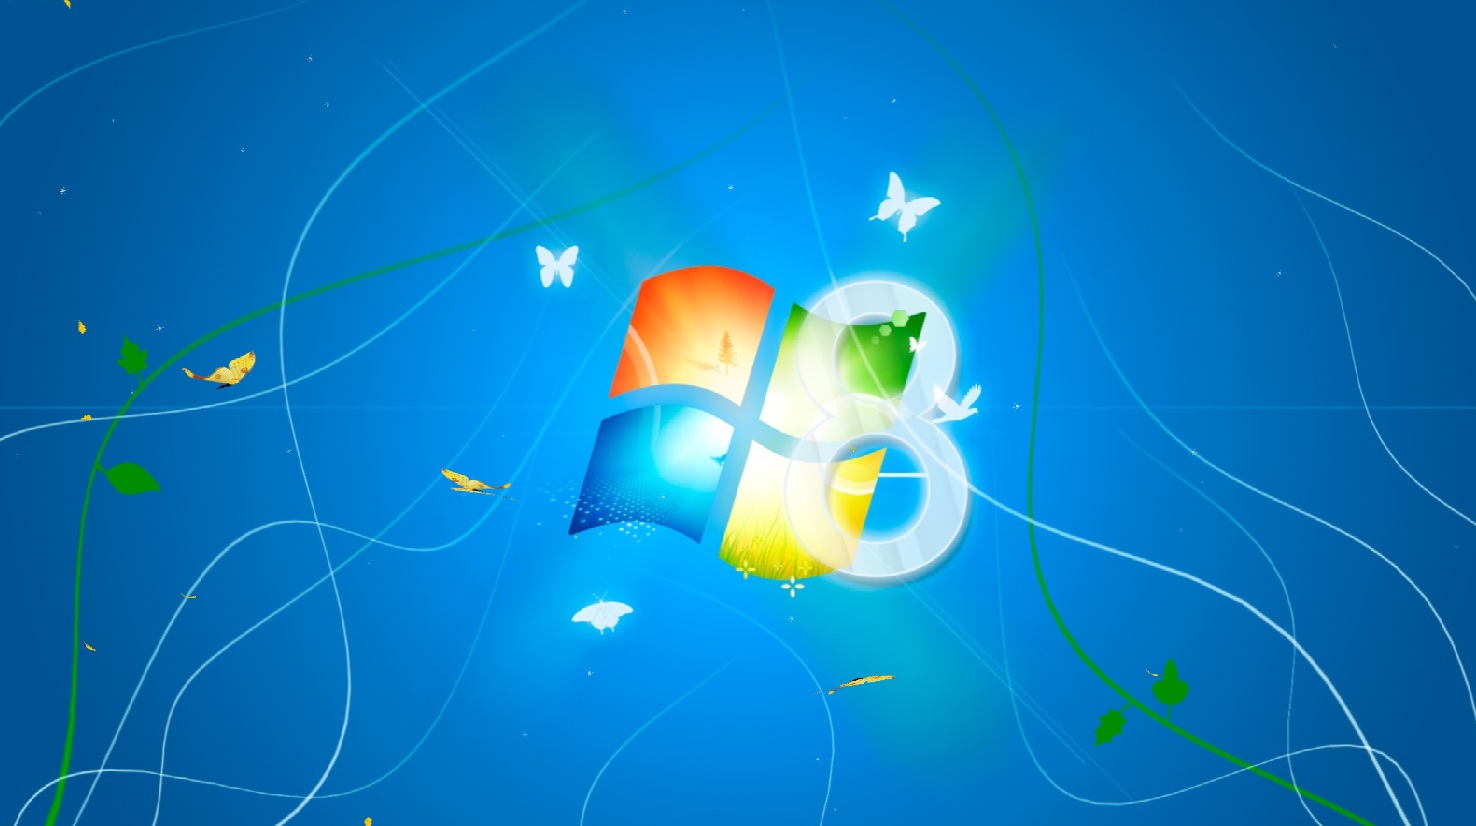 Download Windows 8 Light Animated Wallpaper DesktopAnimatedcom